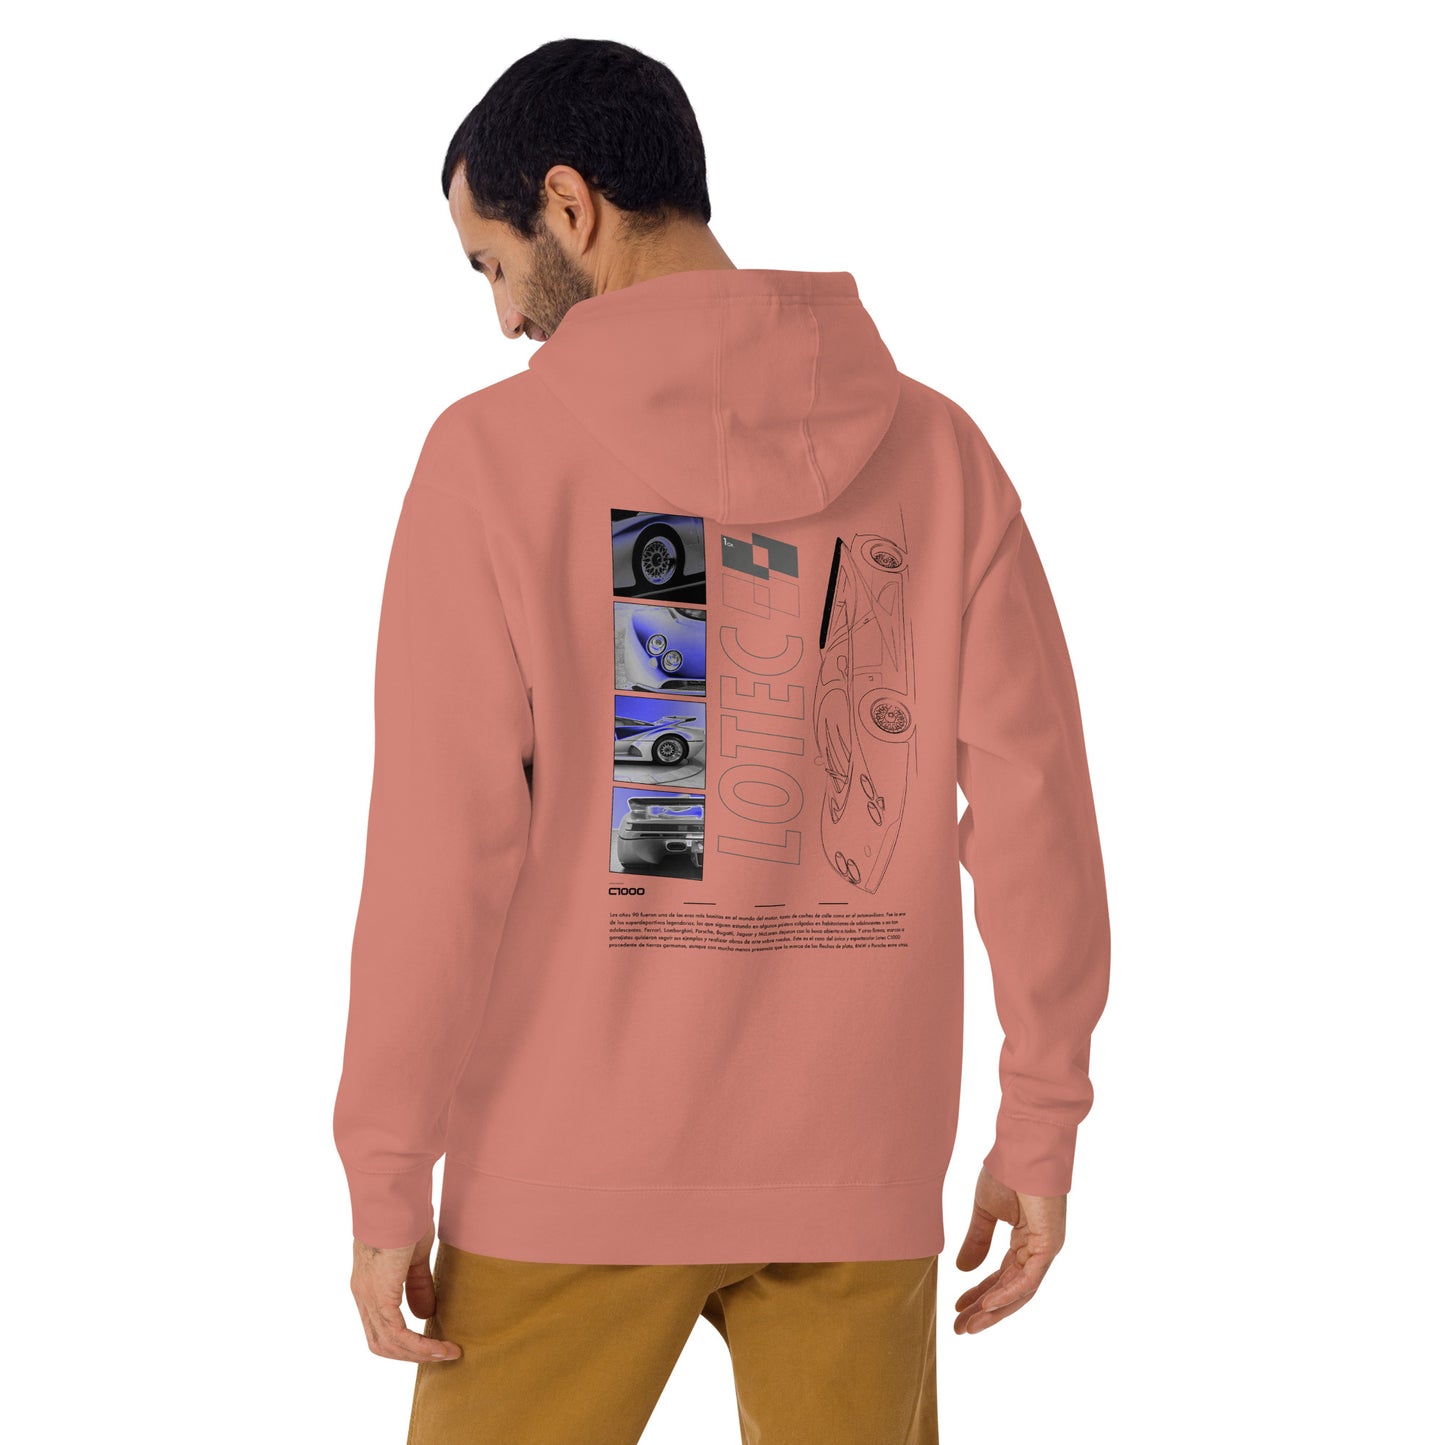 Lotec C1000 unisex hooded sweatshirt